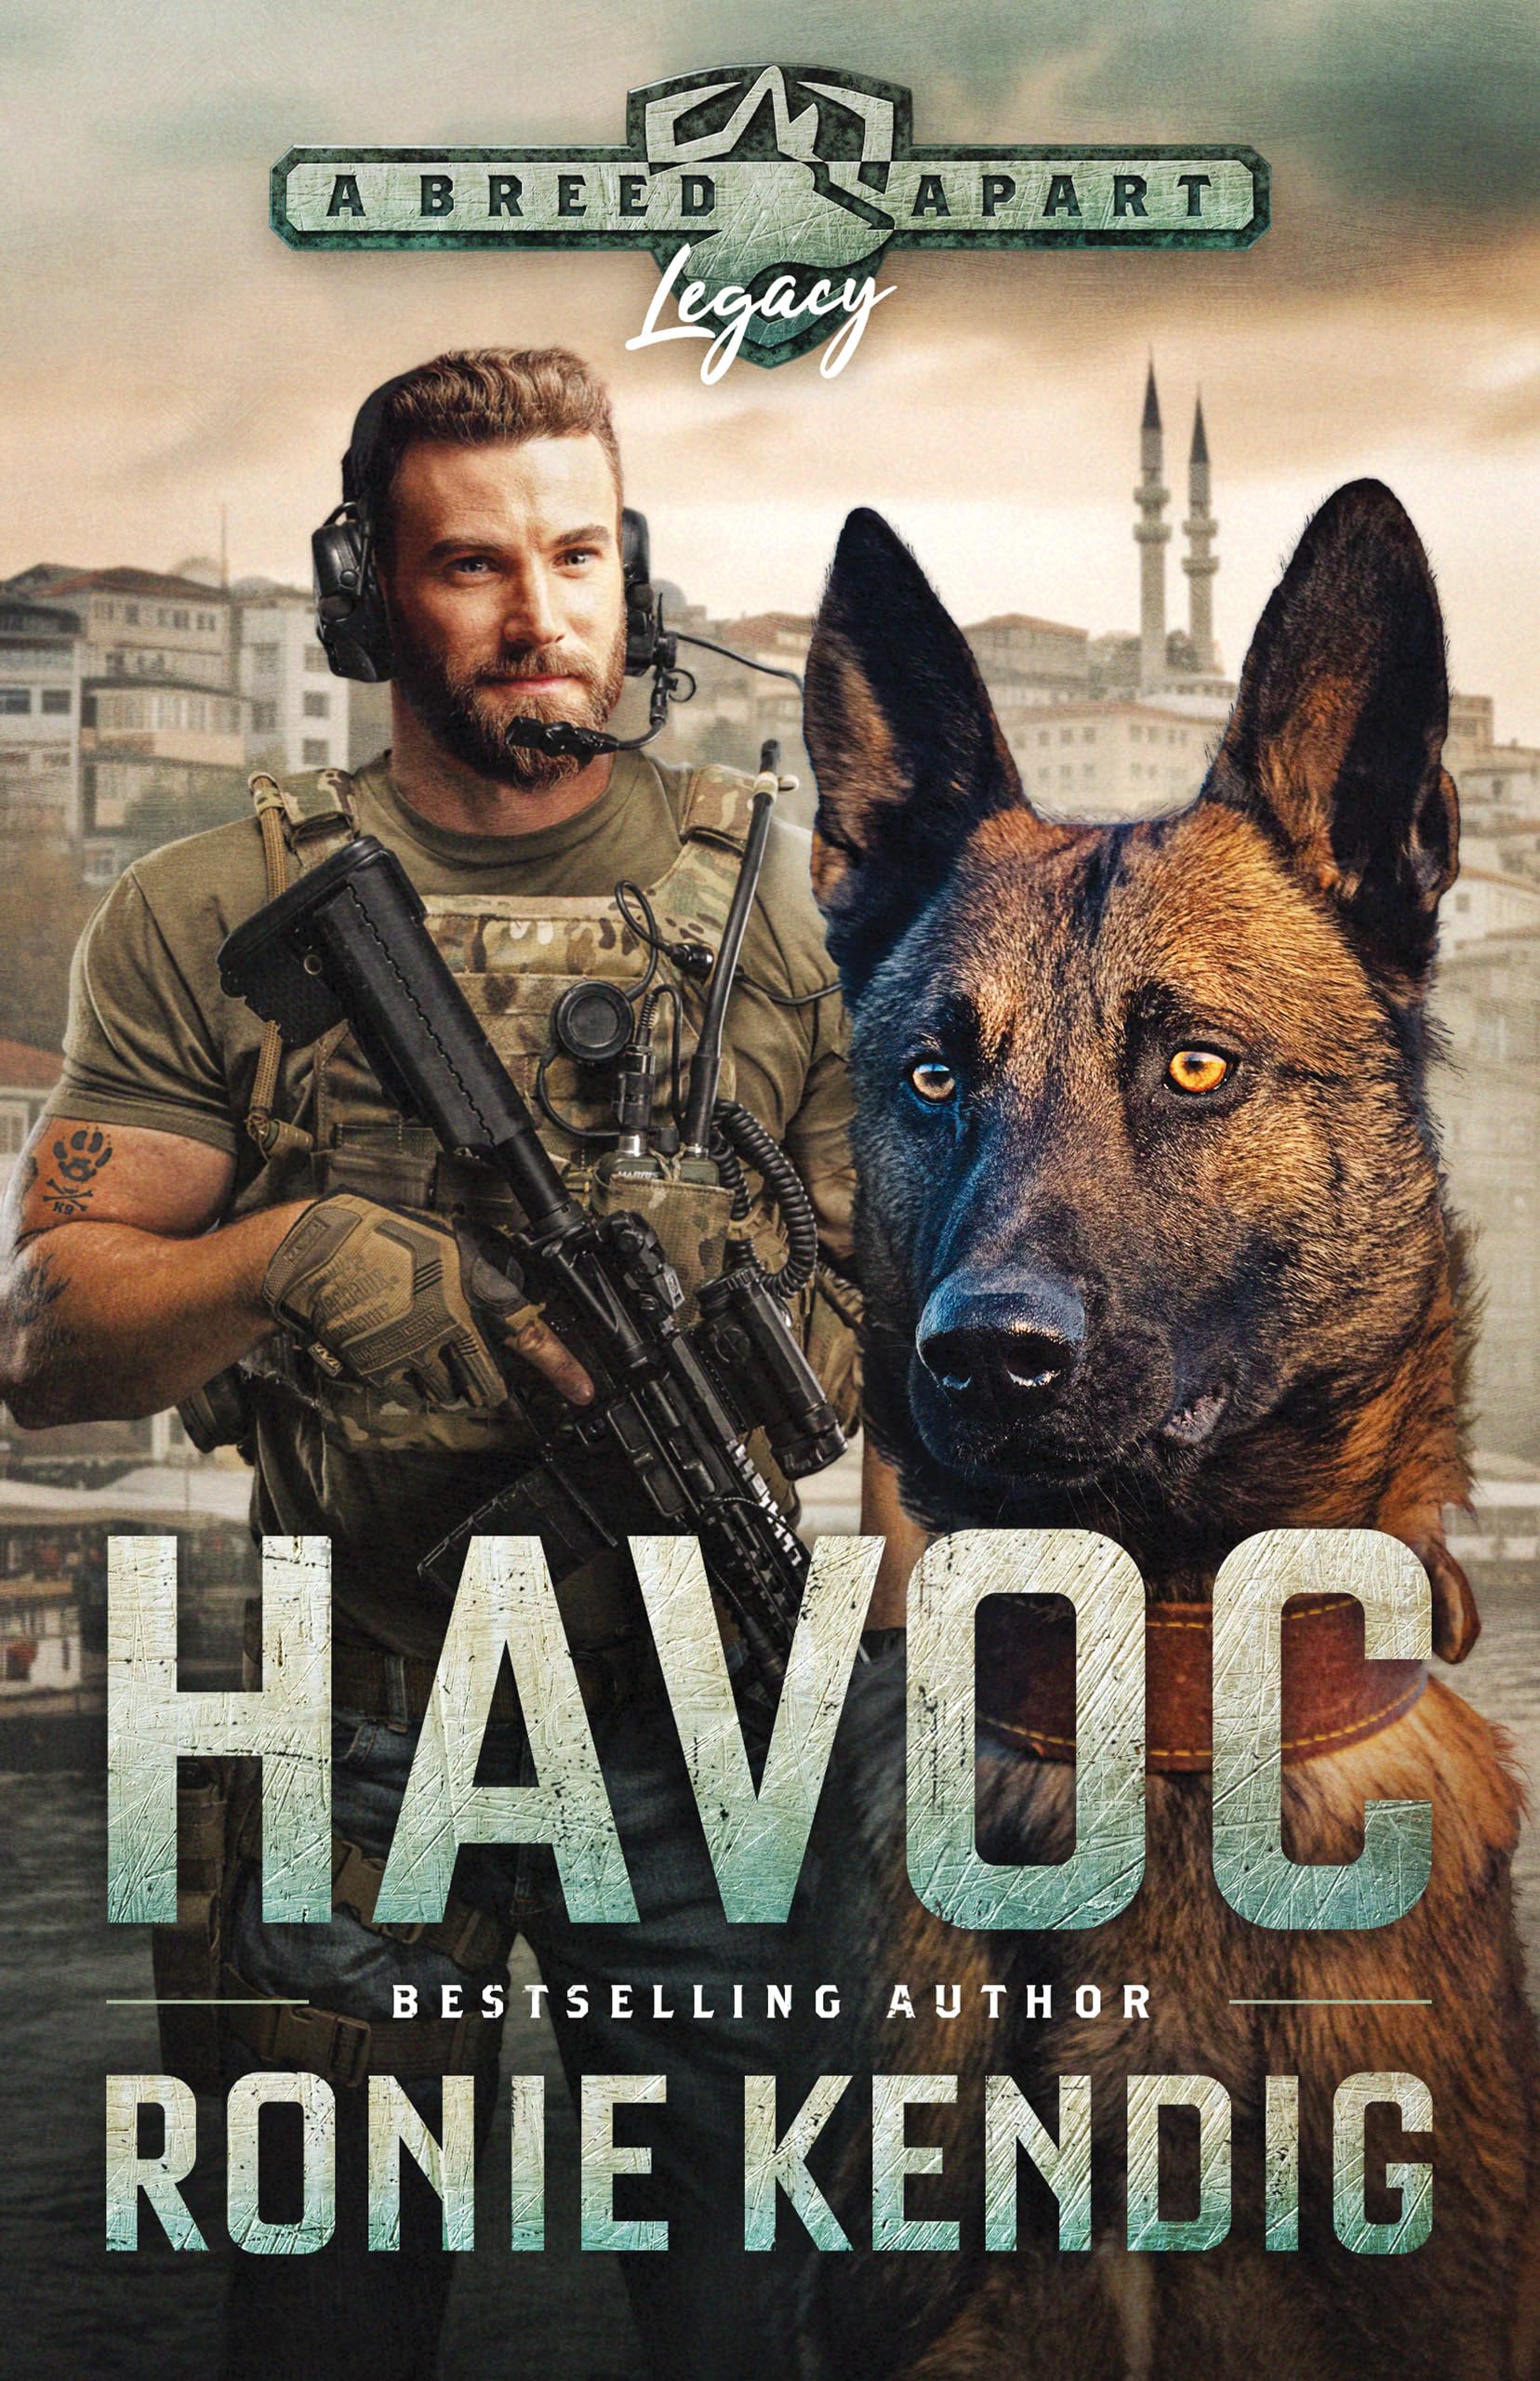 Havoc: A Breed Apart Novel (A Breed Apart: Legacy Book 1)